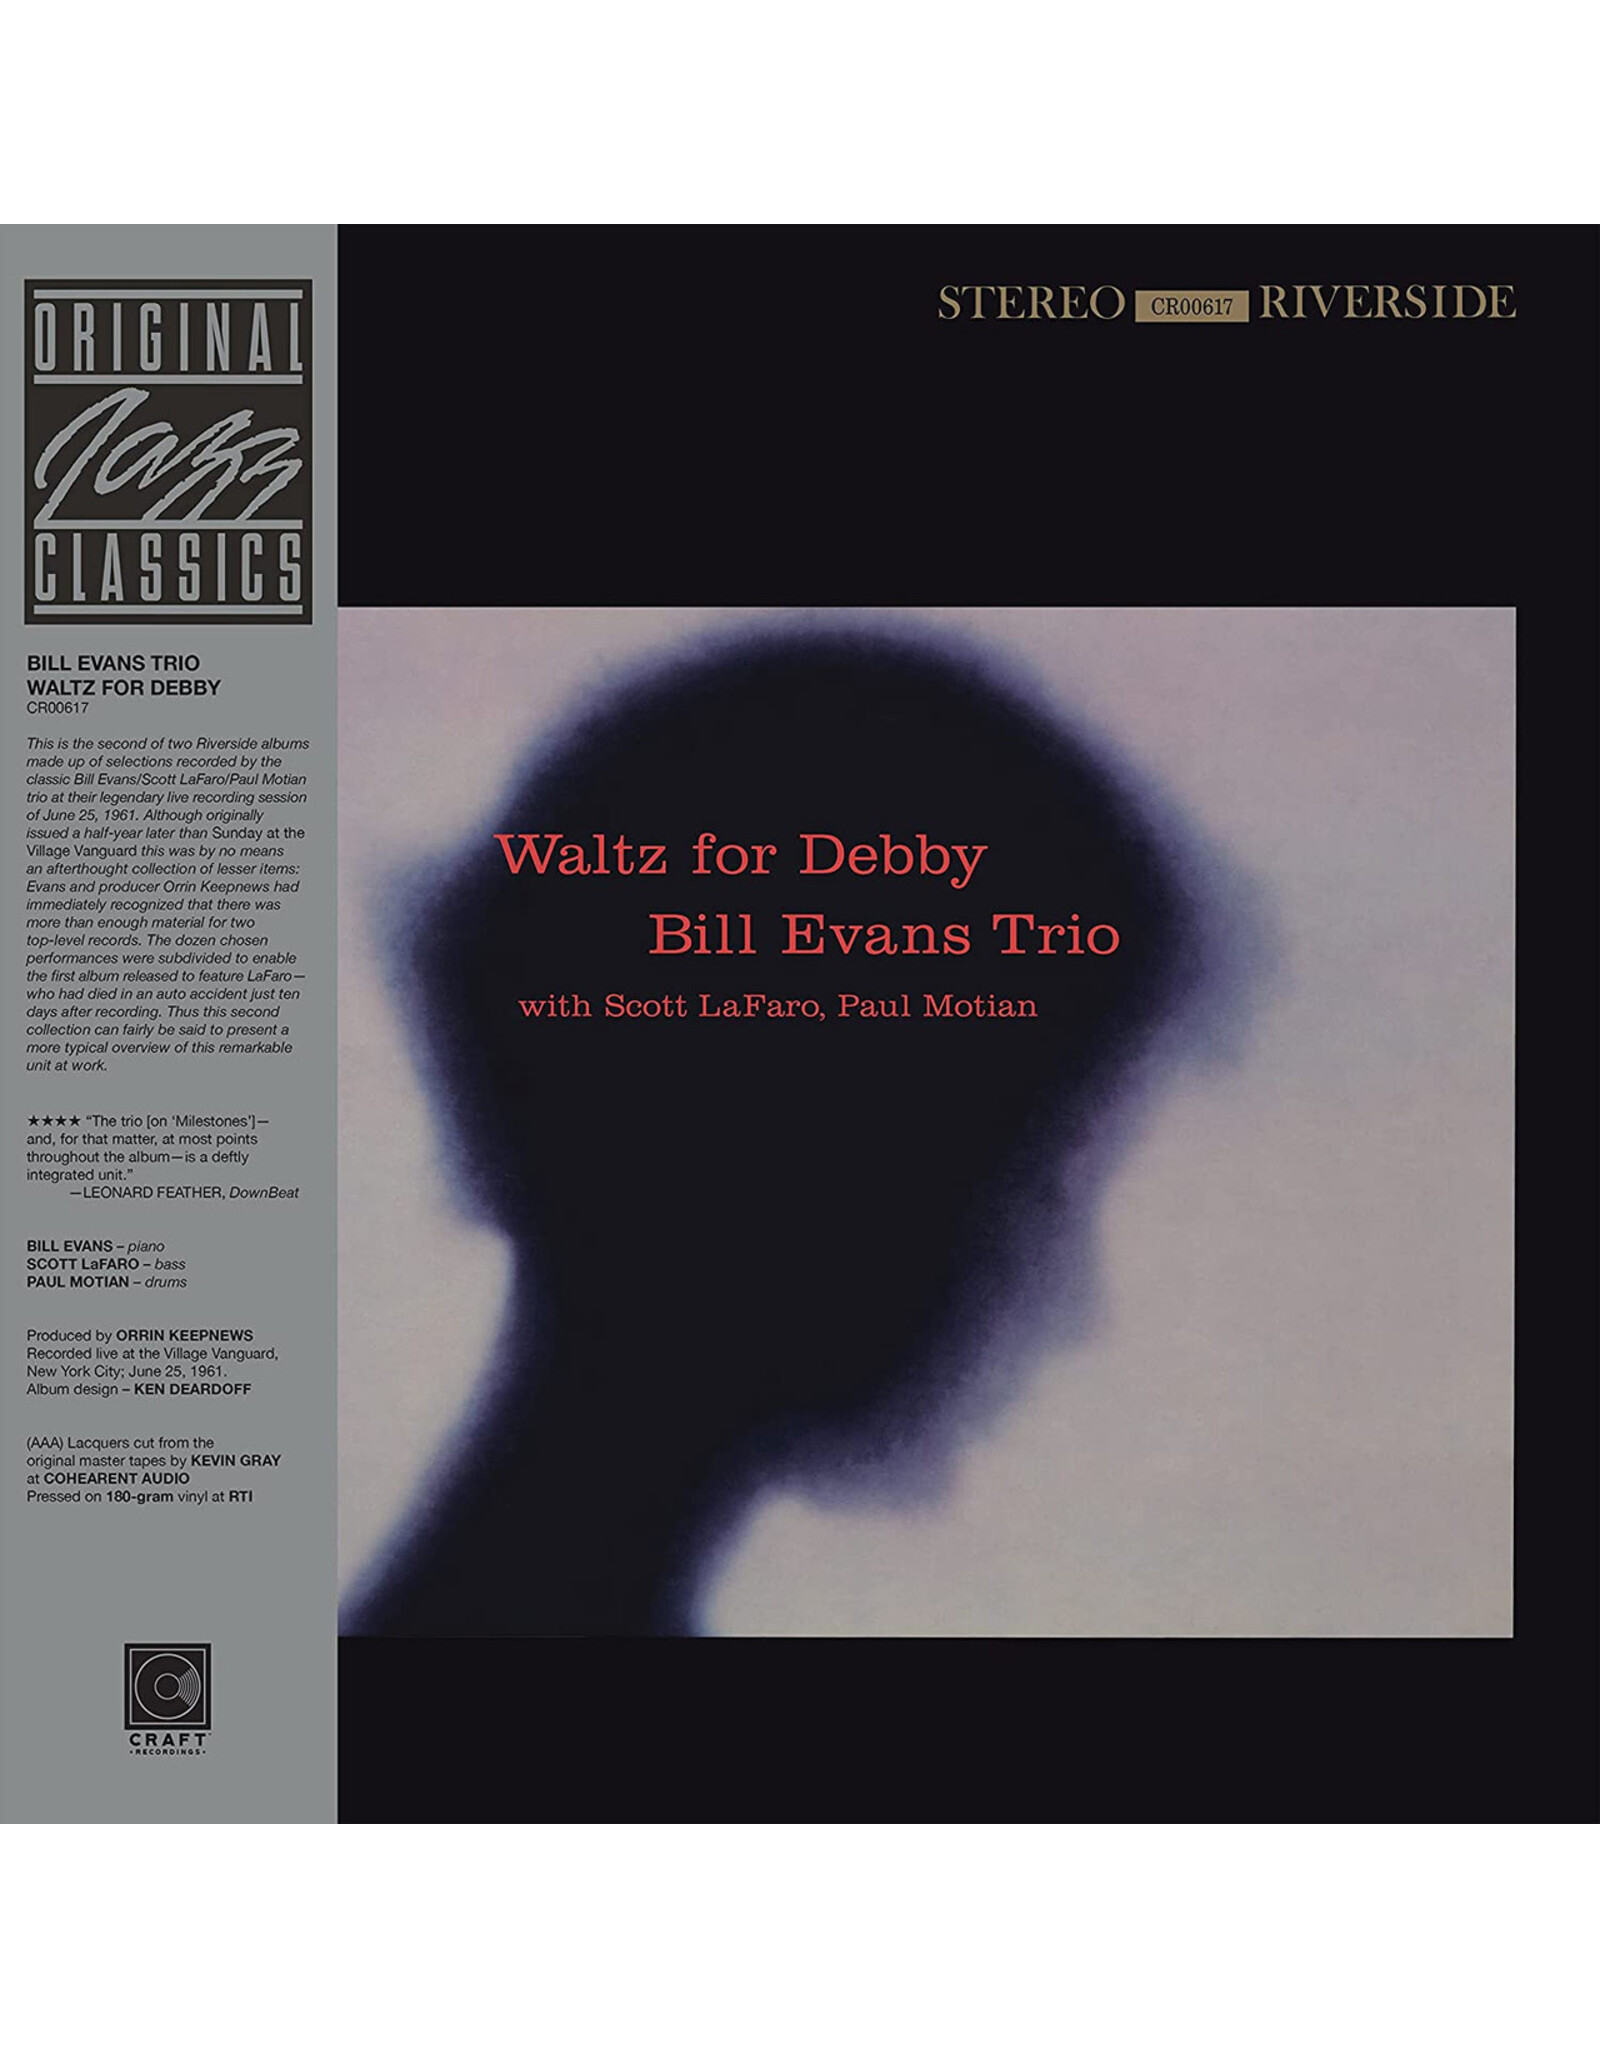 Bill Evans Trio - Waltz For Debby (Original Jazz Classics Series)